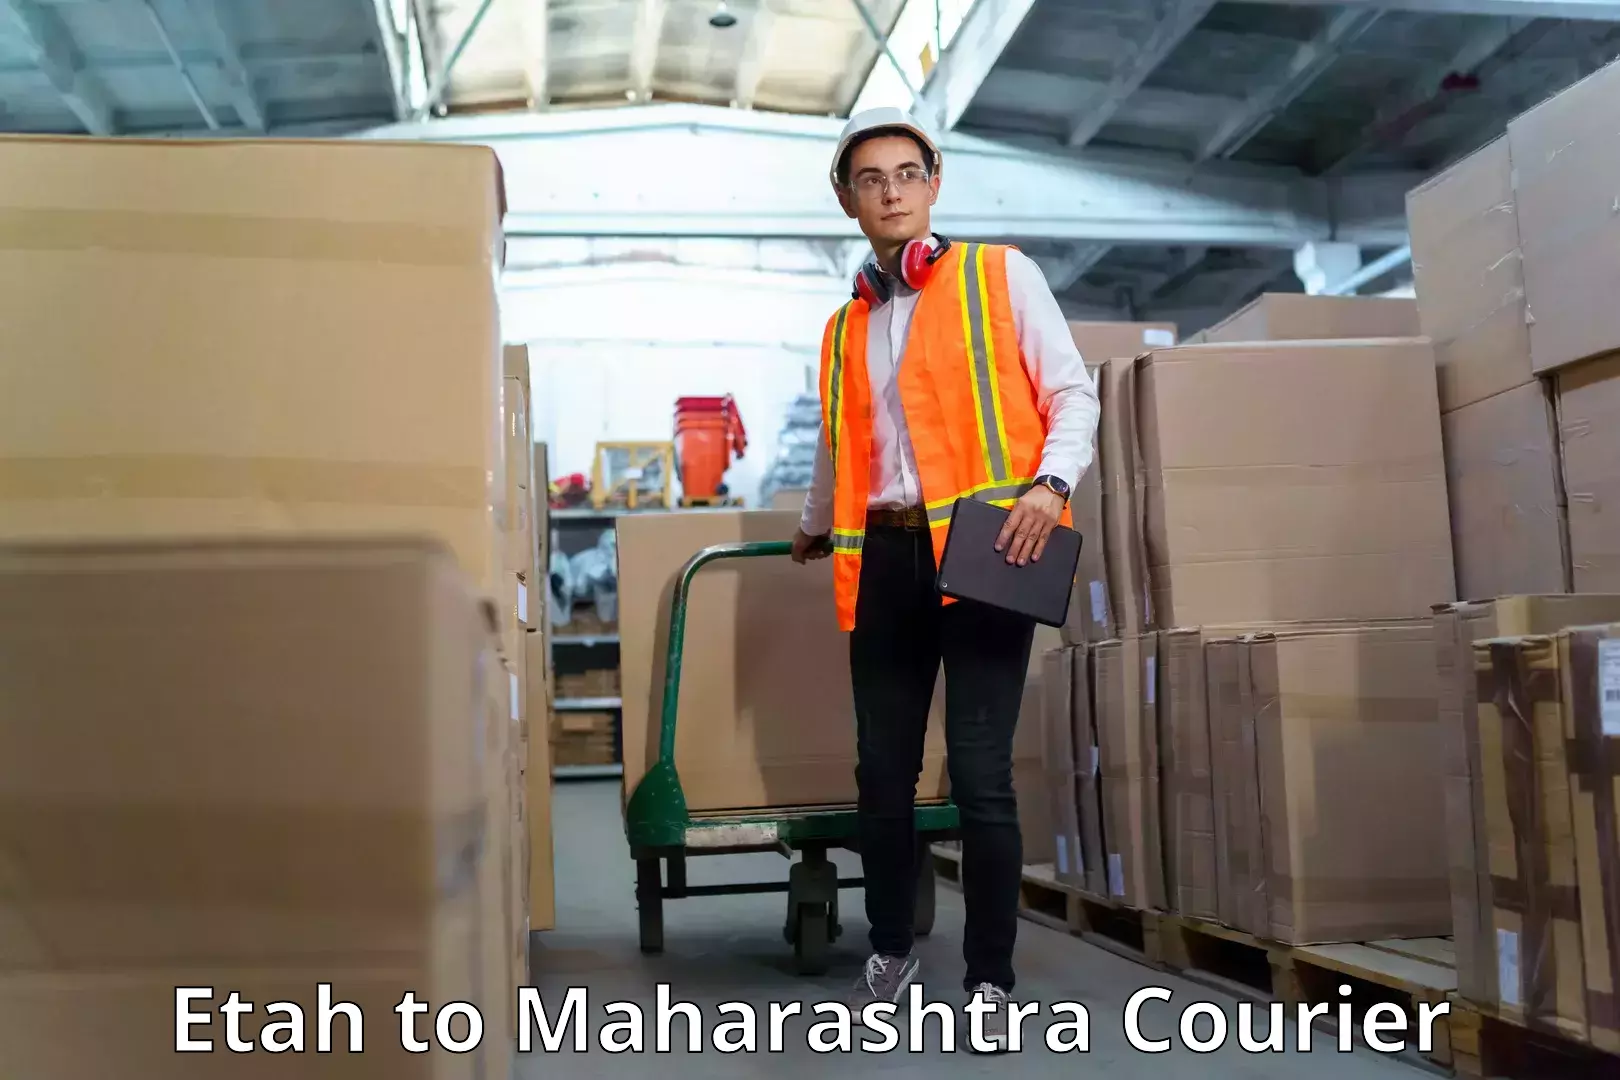 Professional courier handling Etah to Maharashtra